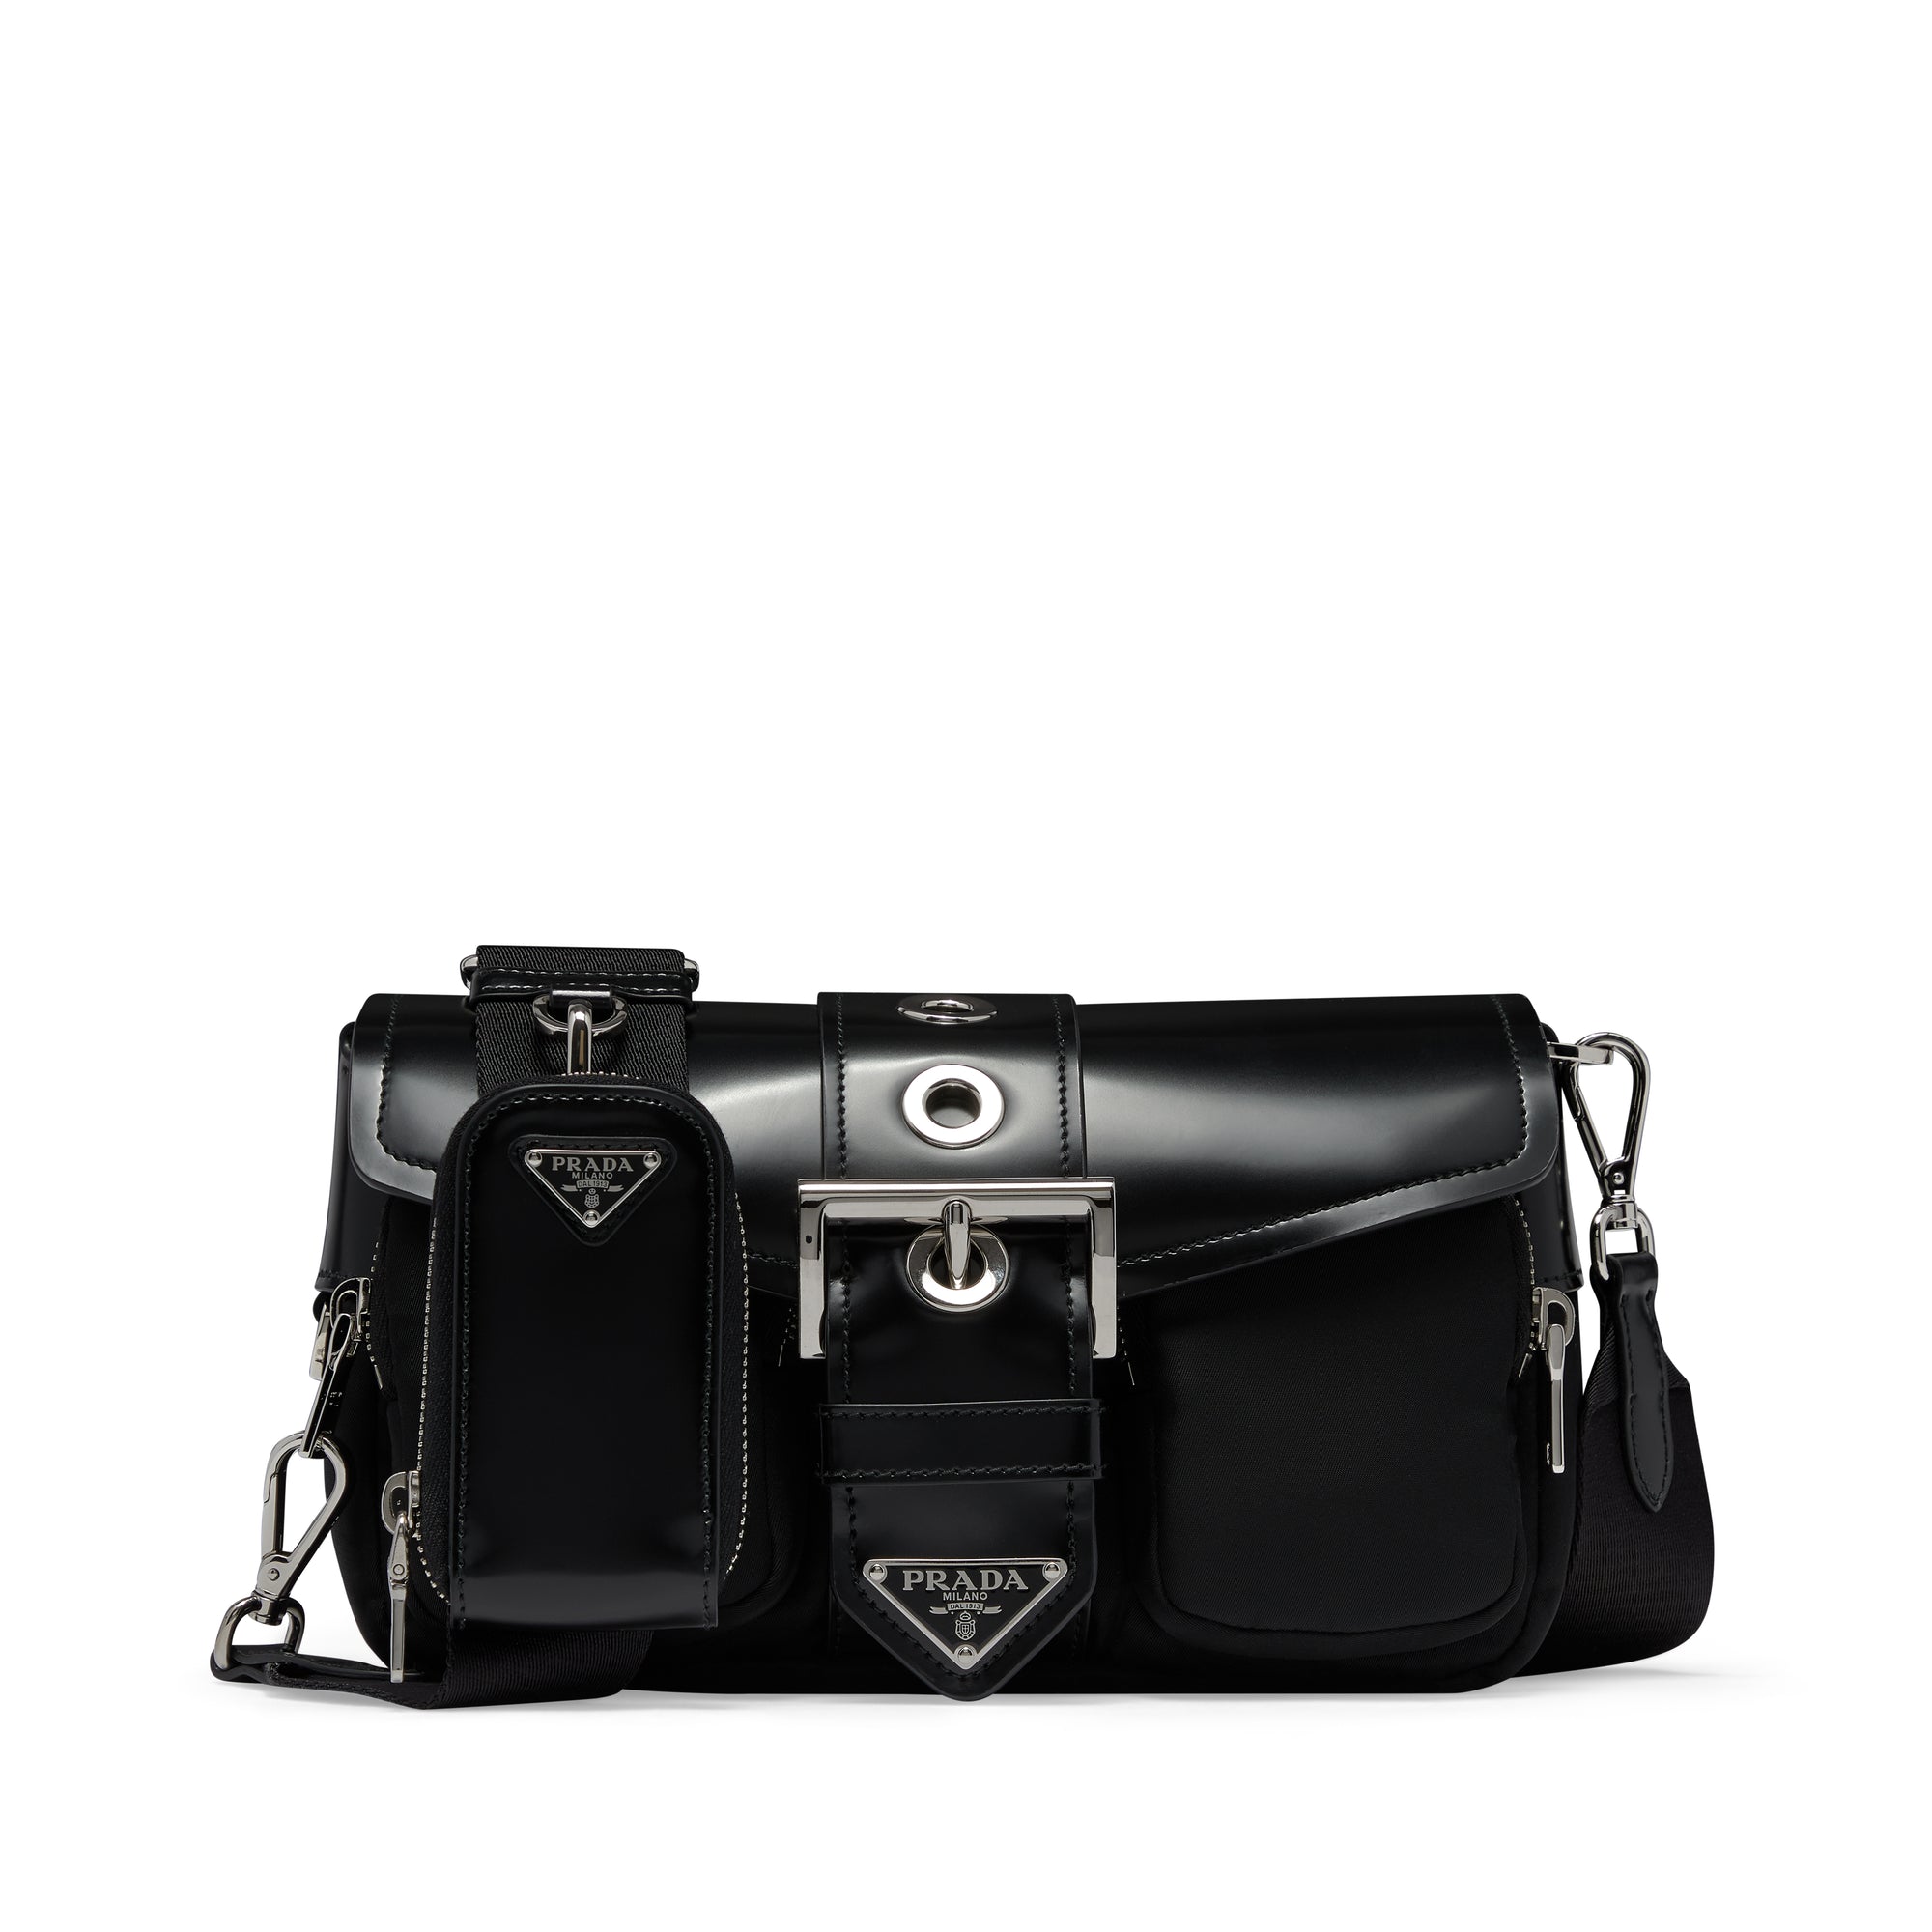 Prada - Women’s Pocket Recycled-Nylon Cross-Body Bag - (Black) view 1